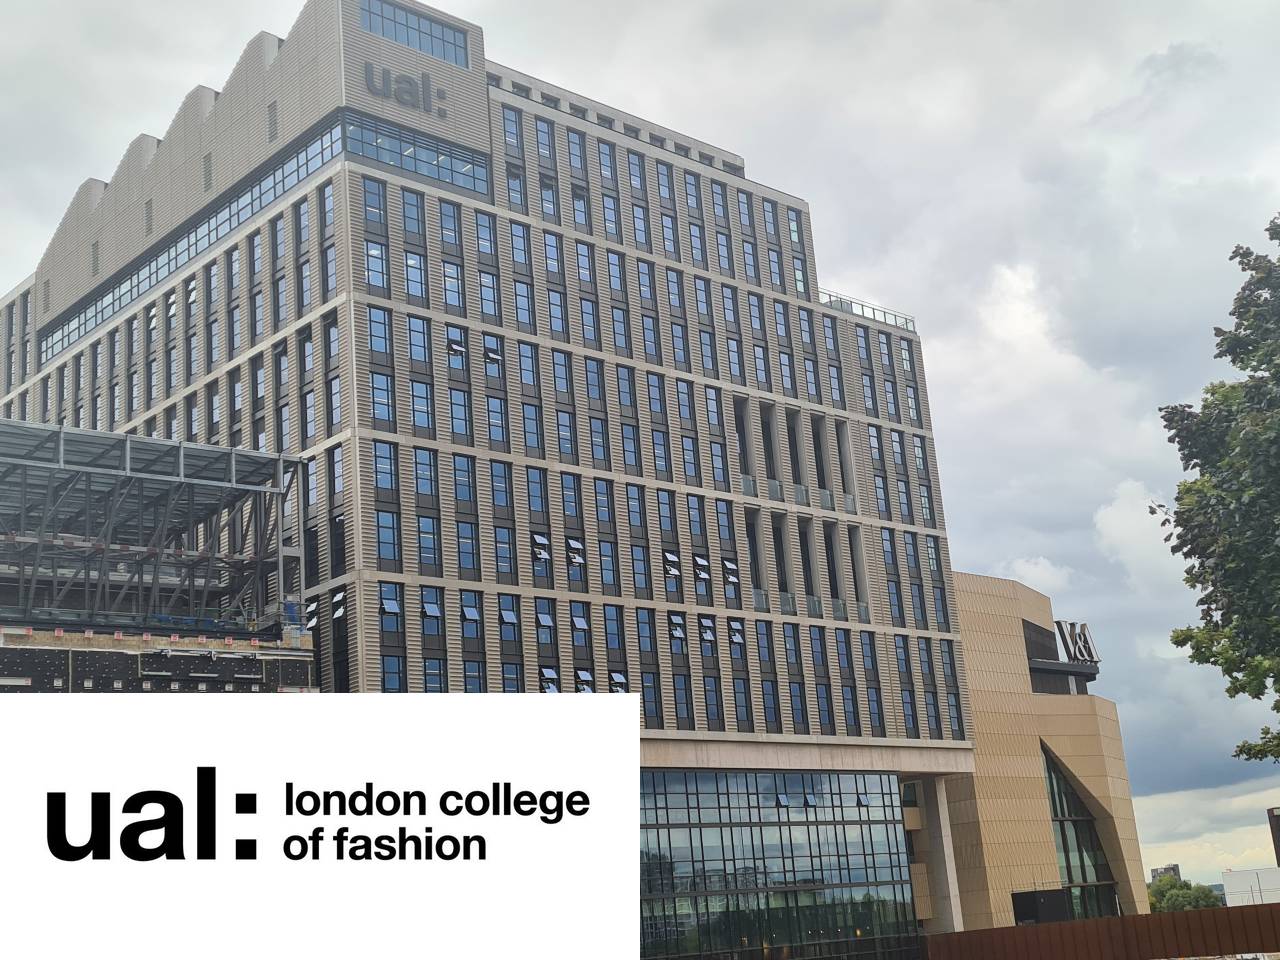 London College of Fashion and VetiGraph